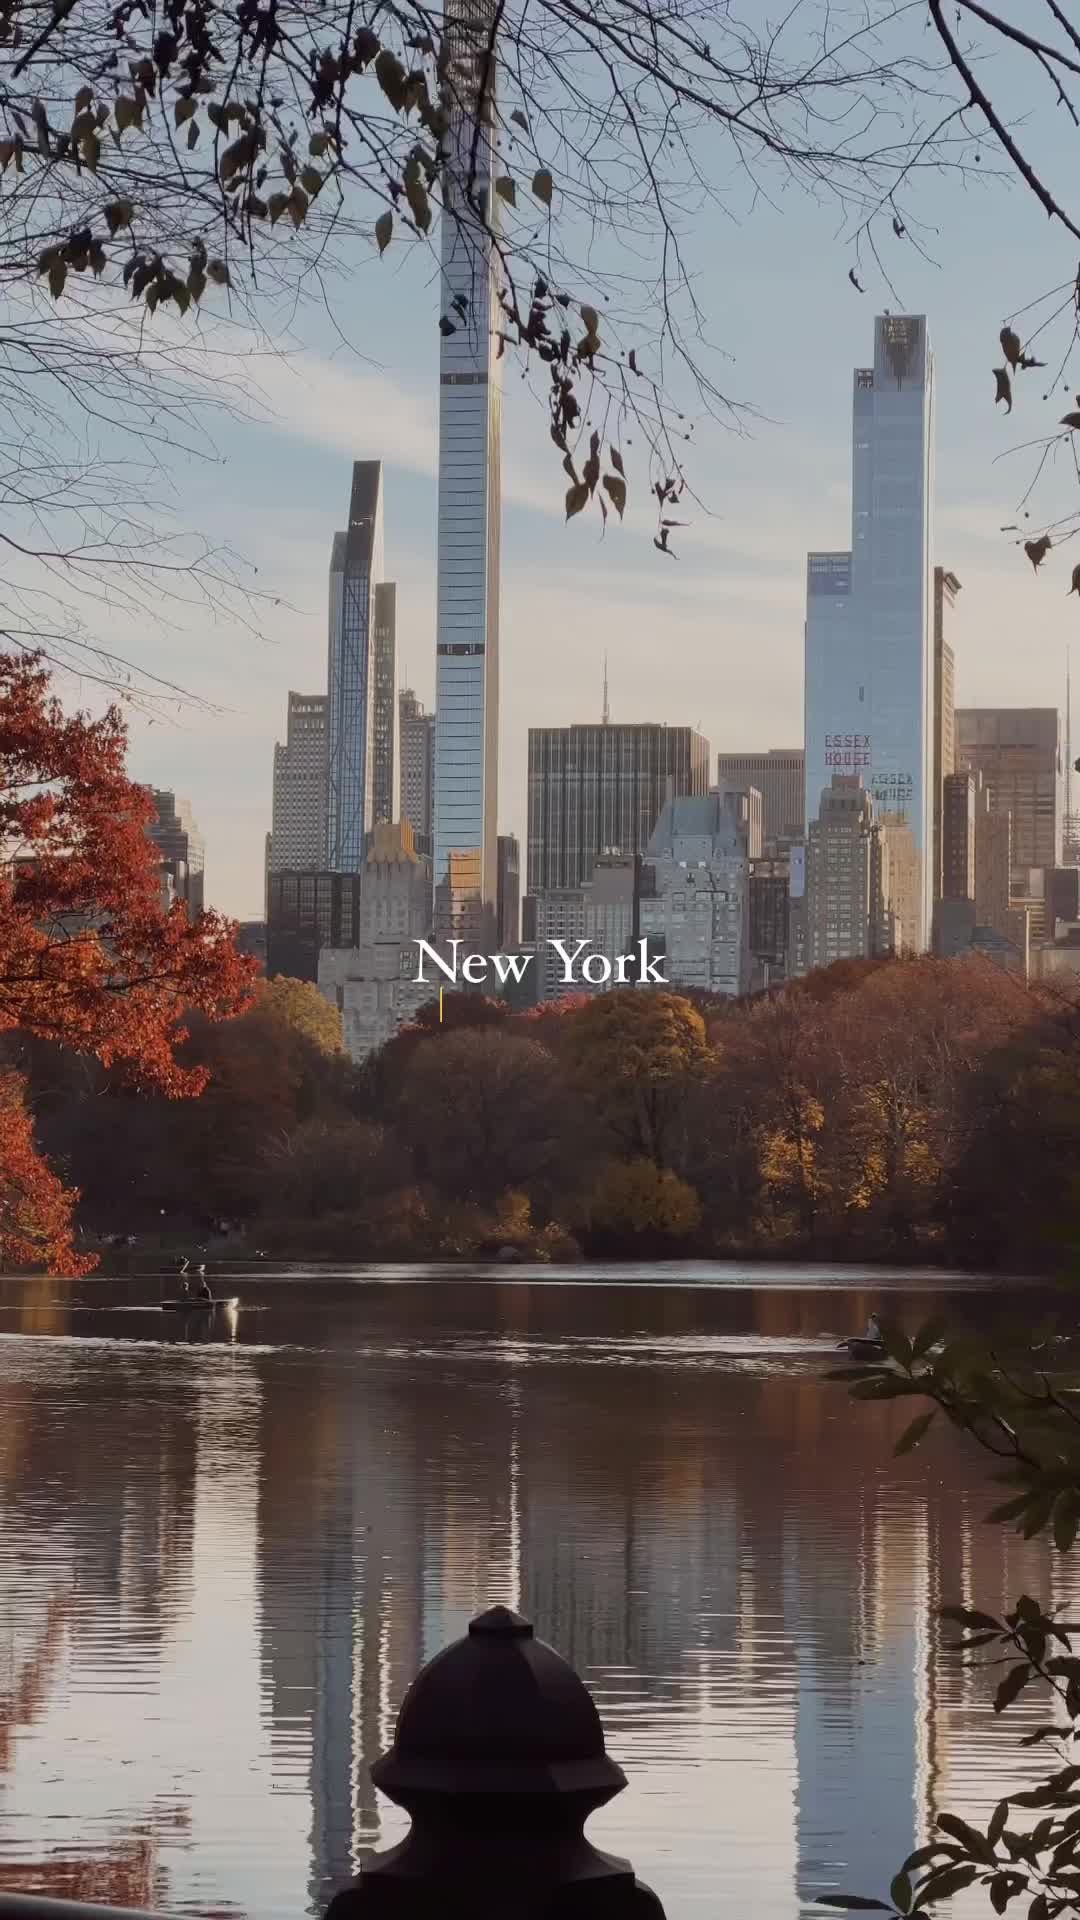 Late November in Central Park: Autumn’s Final Brushstrokes